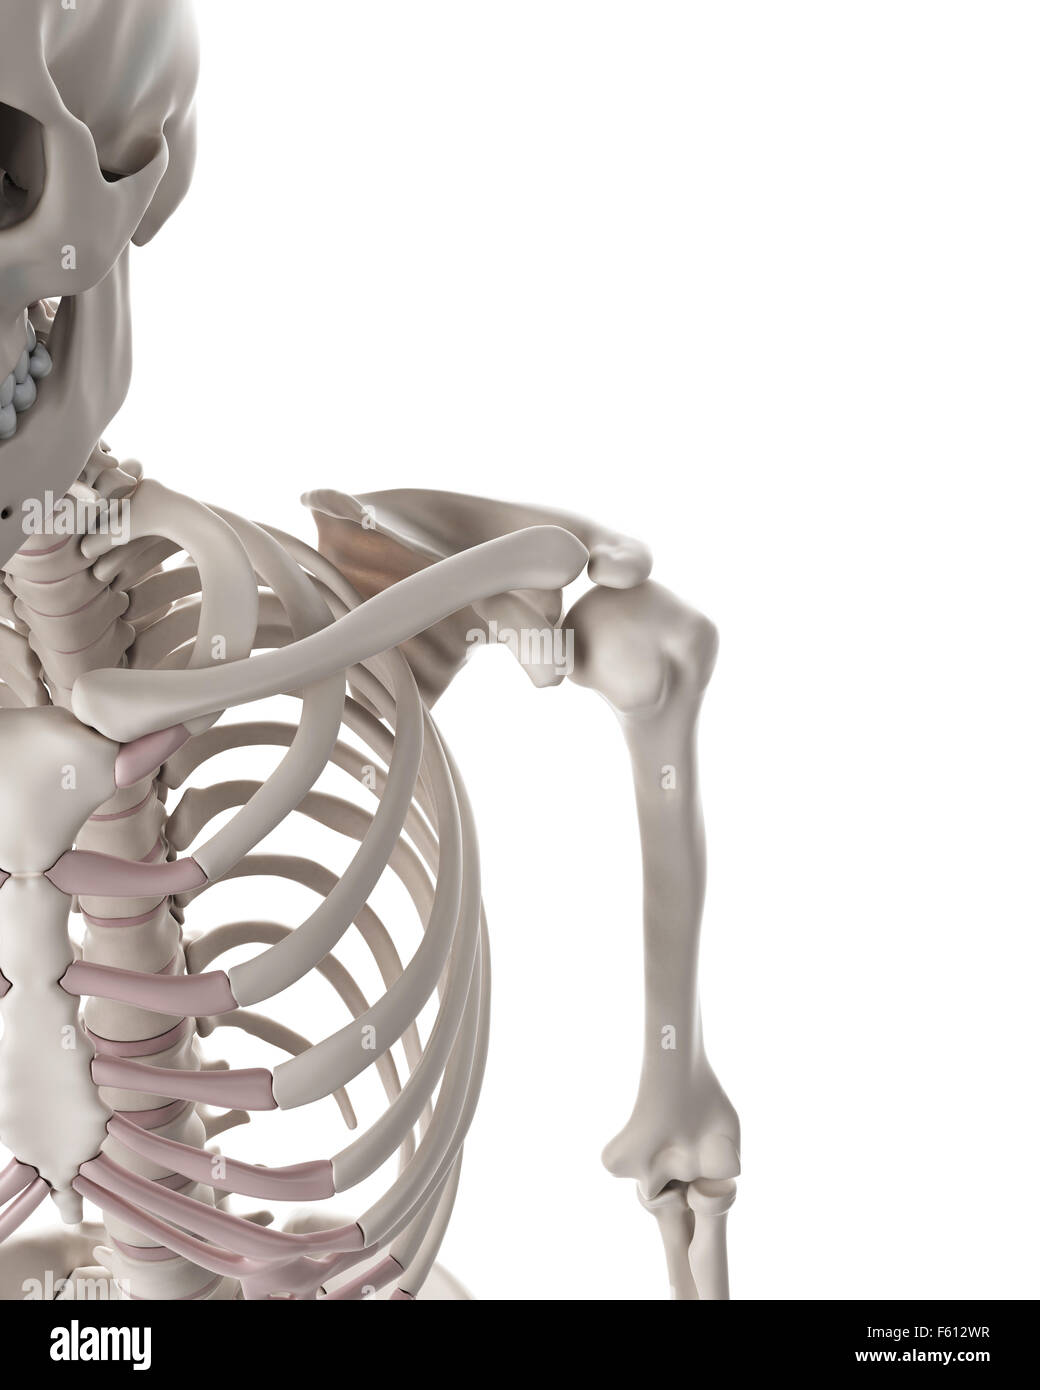 medizinisch genaue Abbildung des Skelettsystems - Schulter Stockfoto